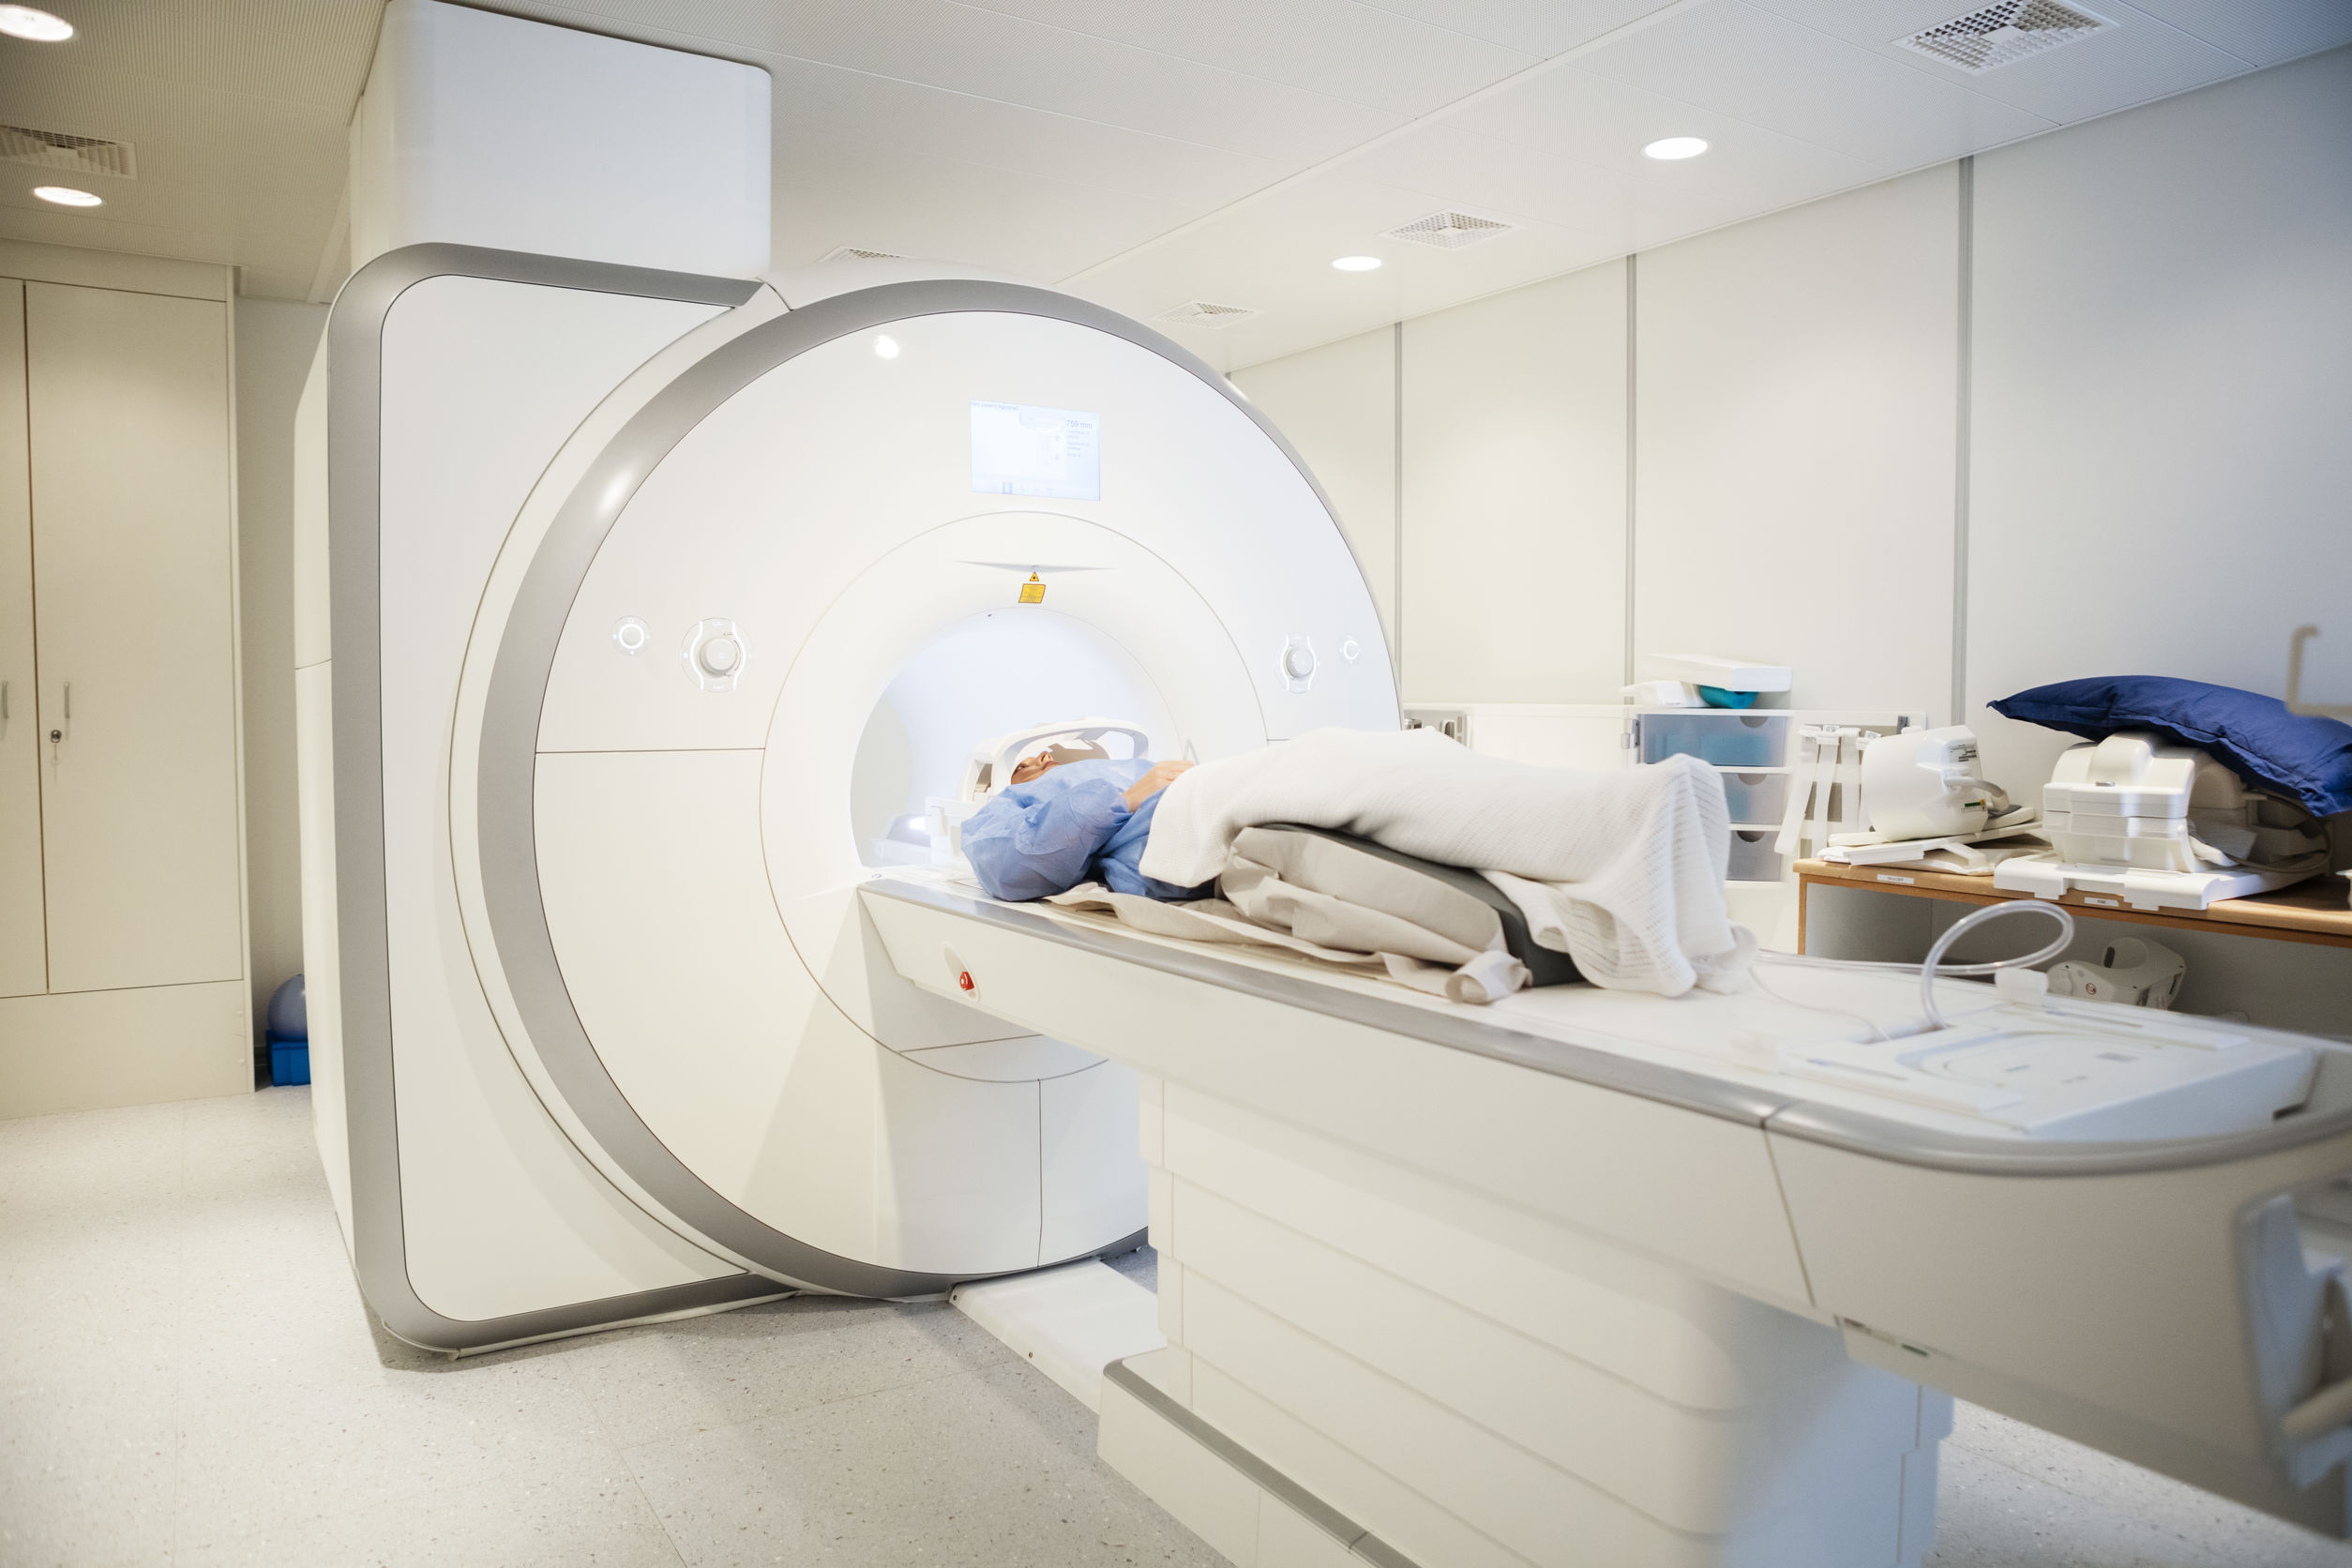 Patient undergoing an MRI procedure